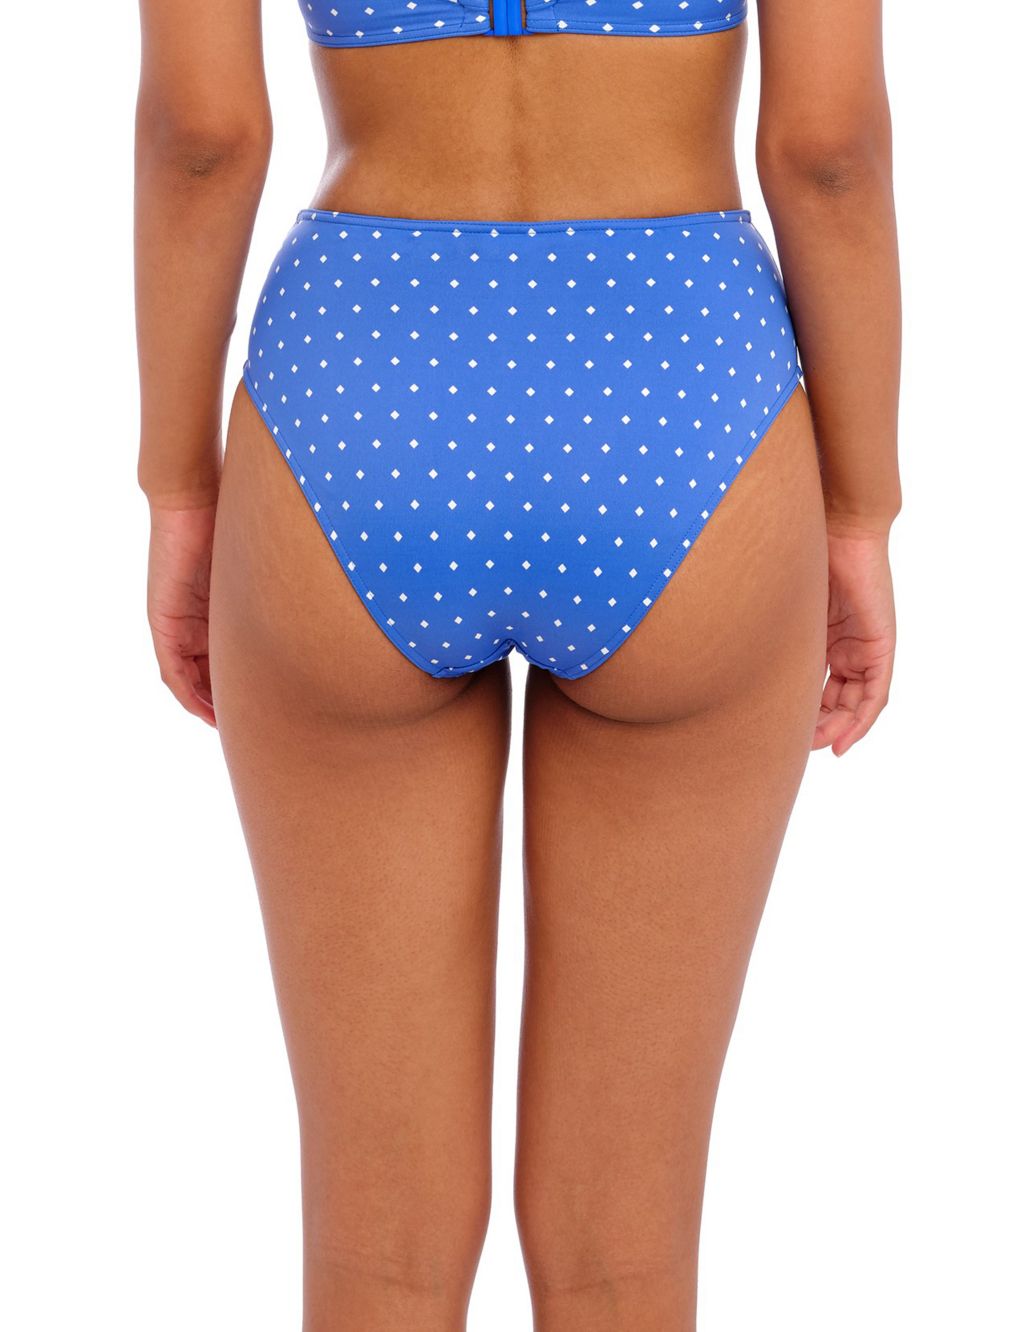 Jewel Cove Printed High Leg Bikini Bottoms image 3